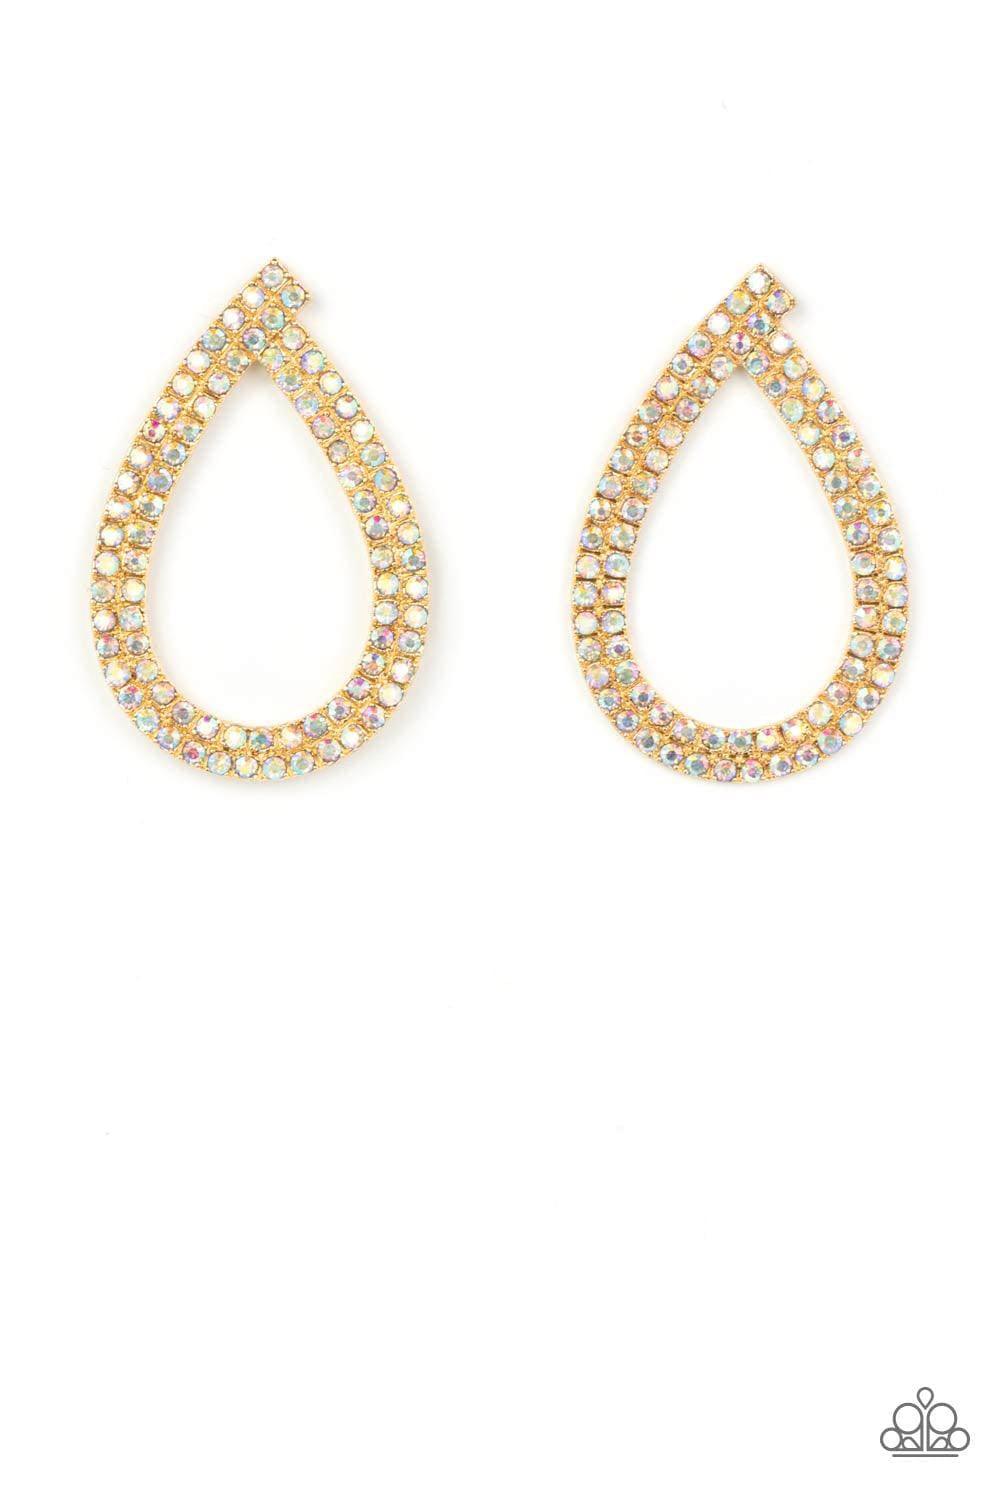 Paparazzi Accessories - Diva Dust - Gold Earrings - Bling by JessieK